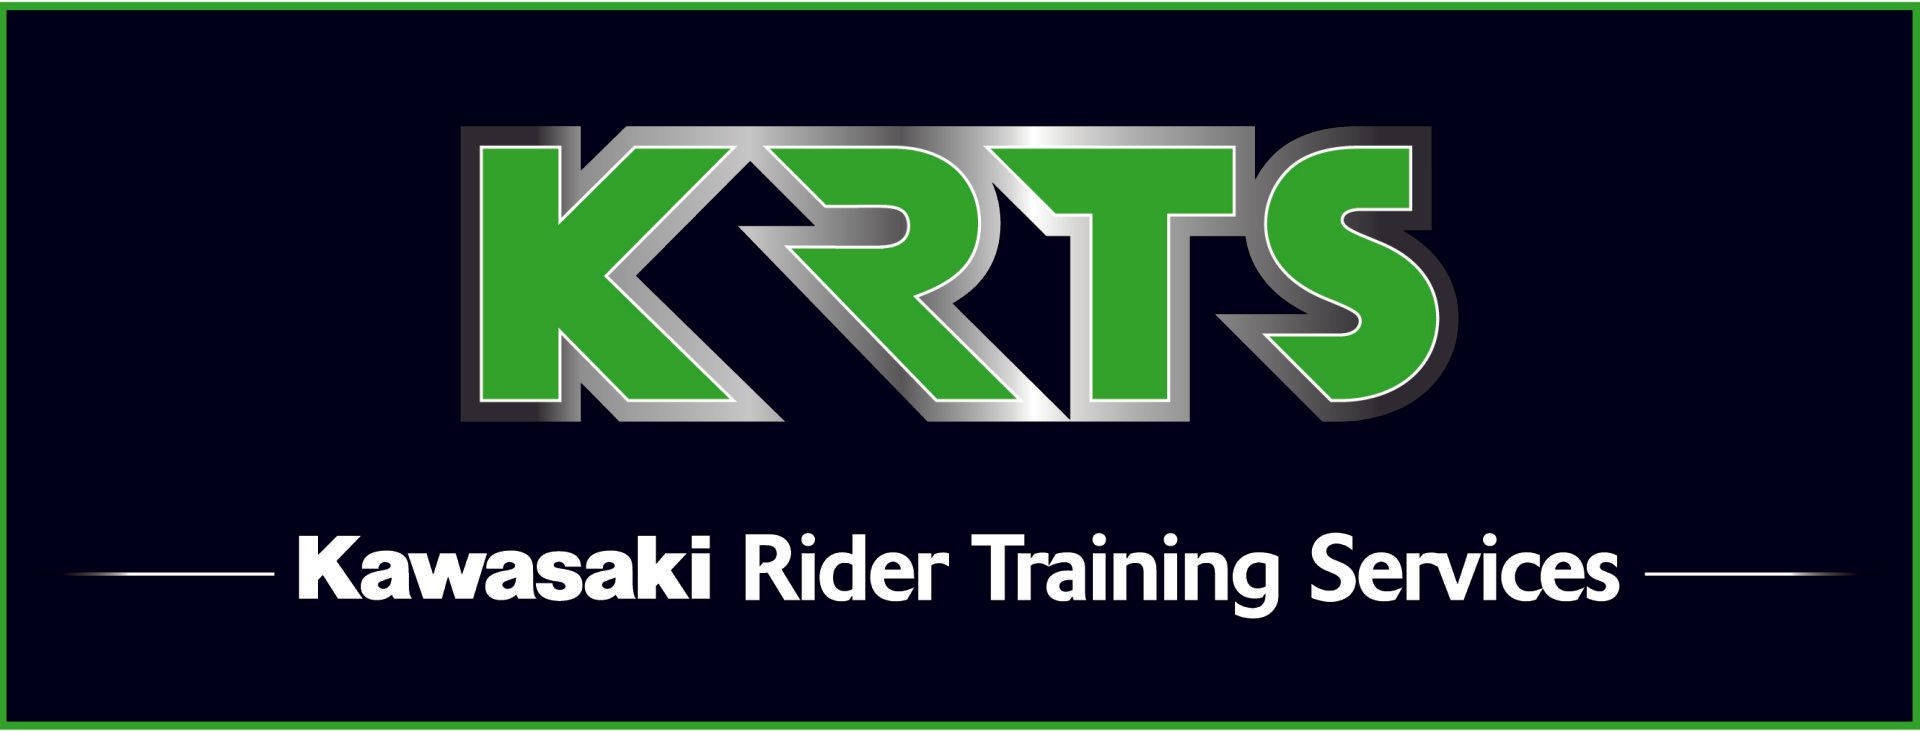 KRTS Logo